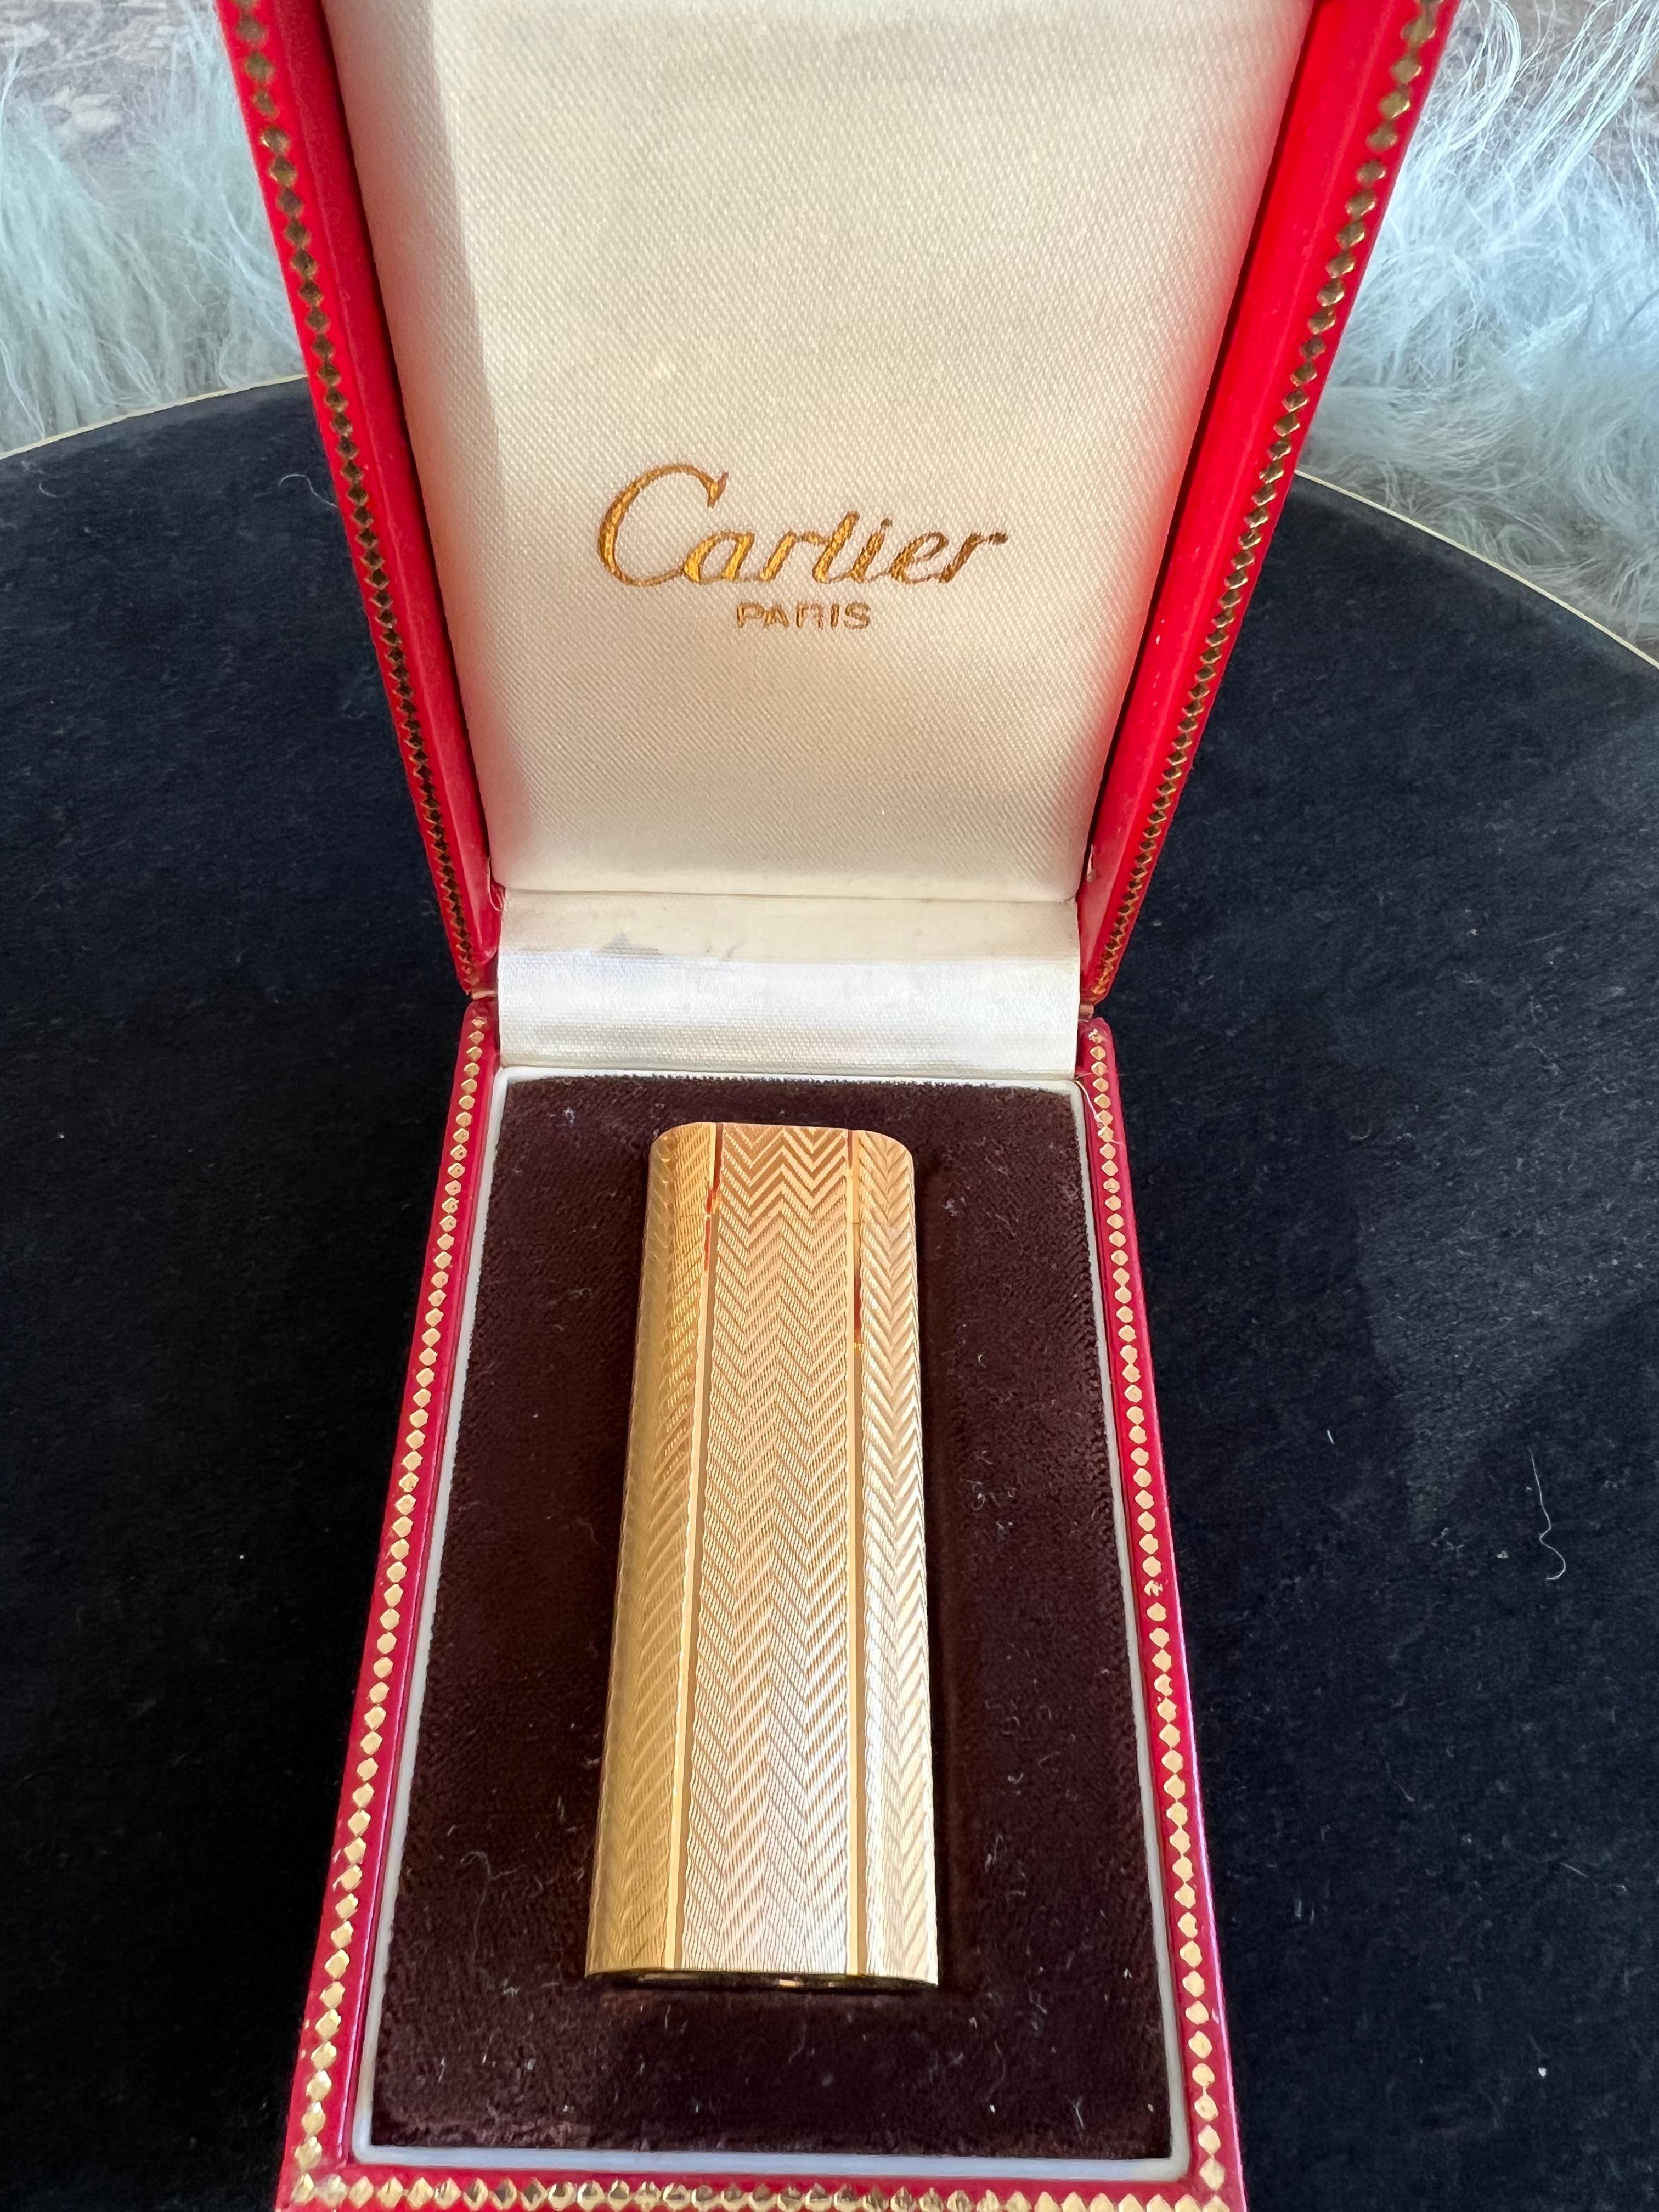 A Les Must De Cartier Paris 18k gold plated lighter 6